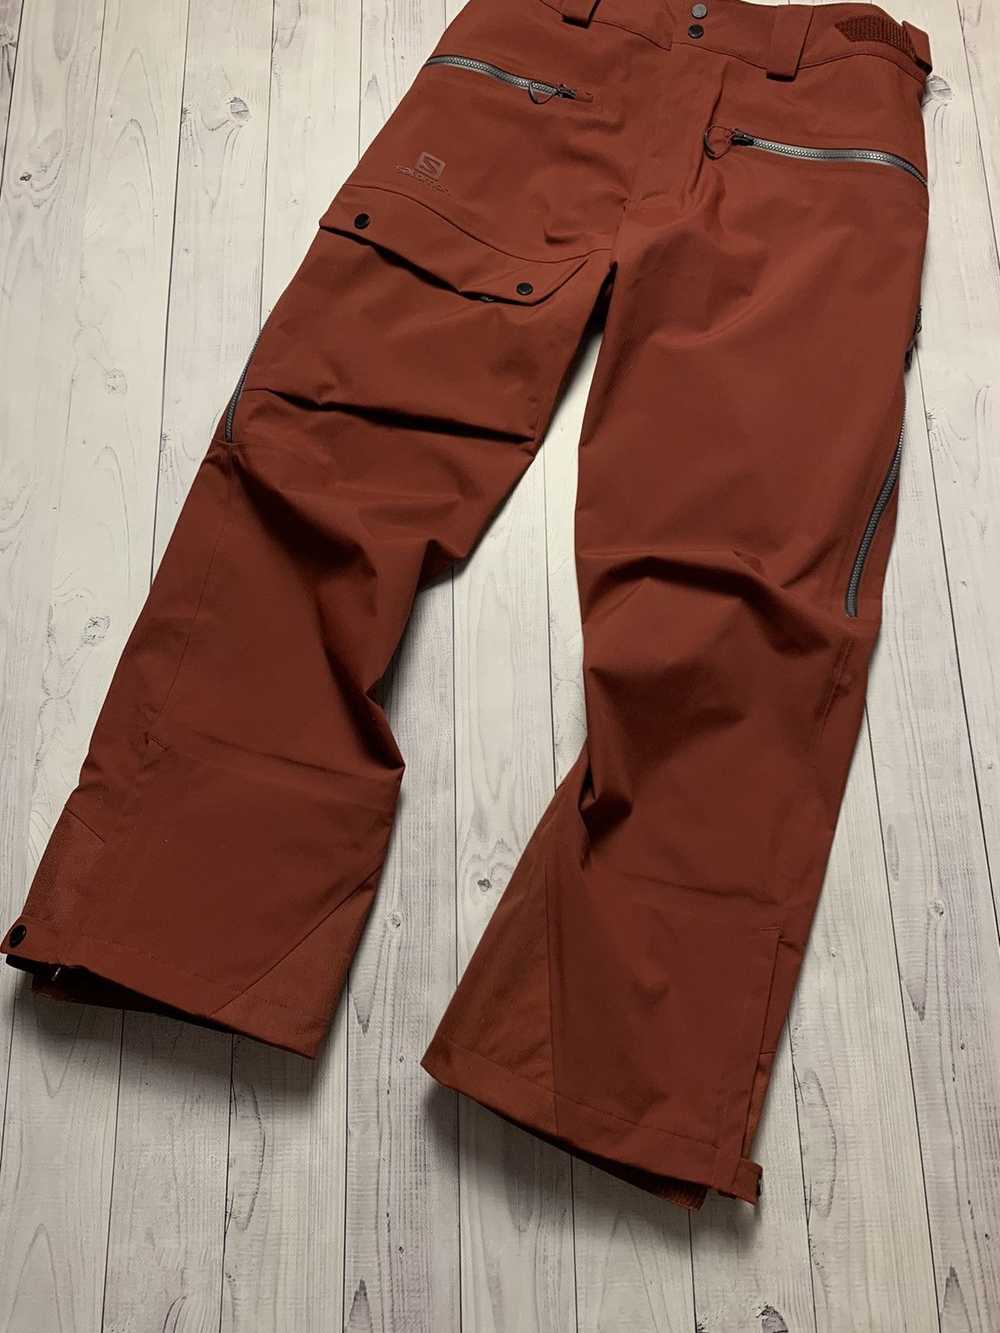 Outdoor Life × Salomon Salomon pro ski pants size… - image 2